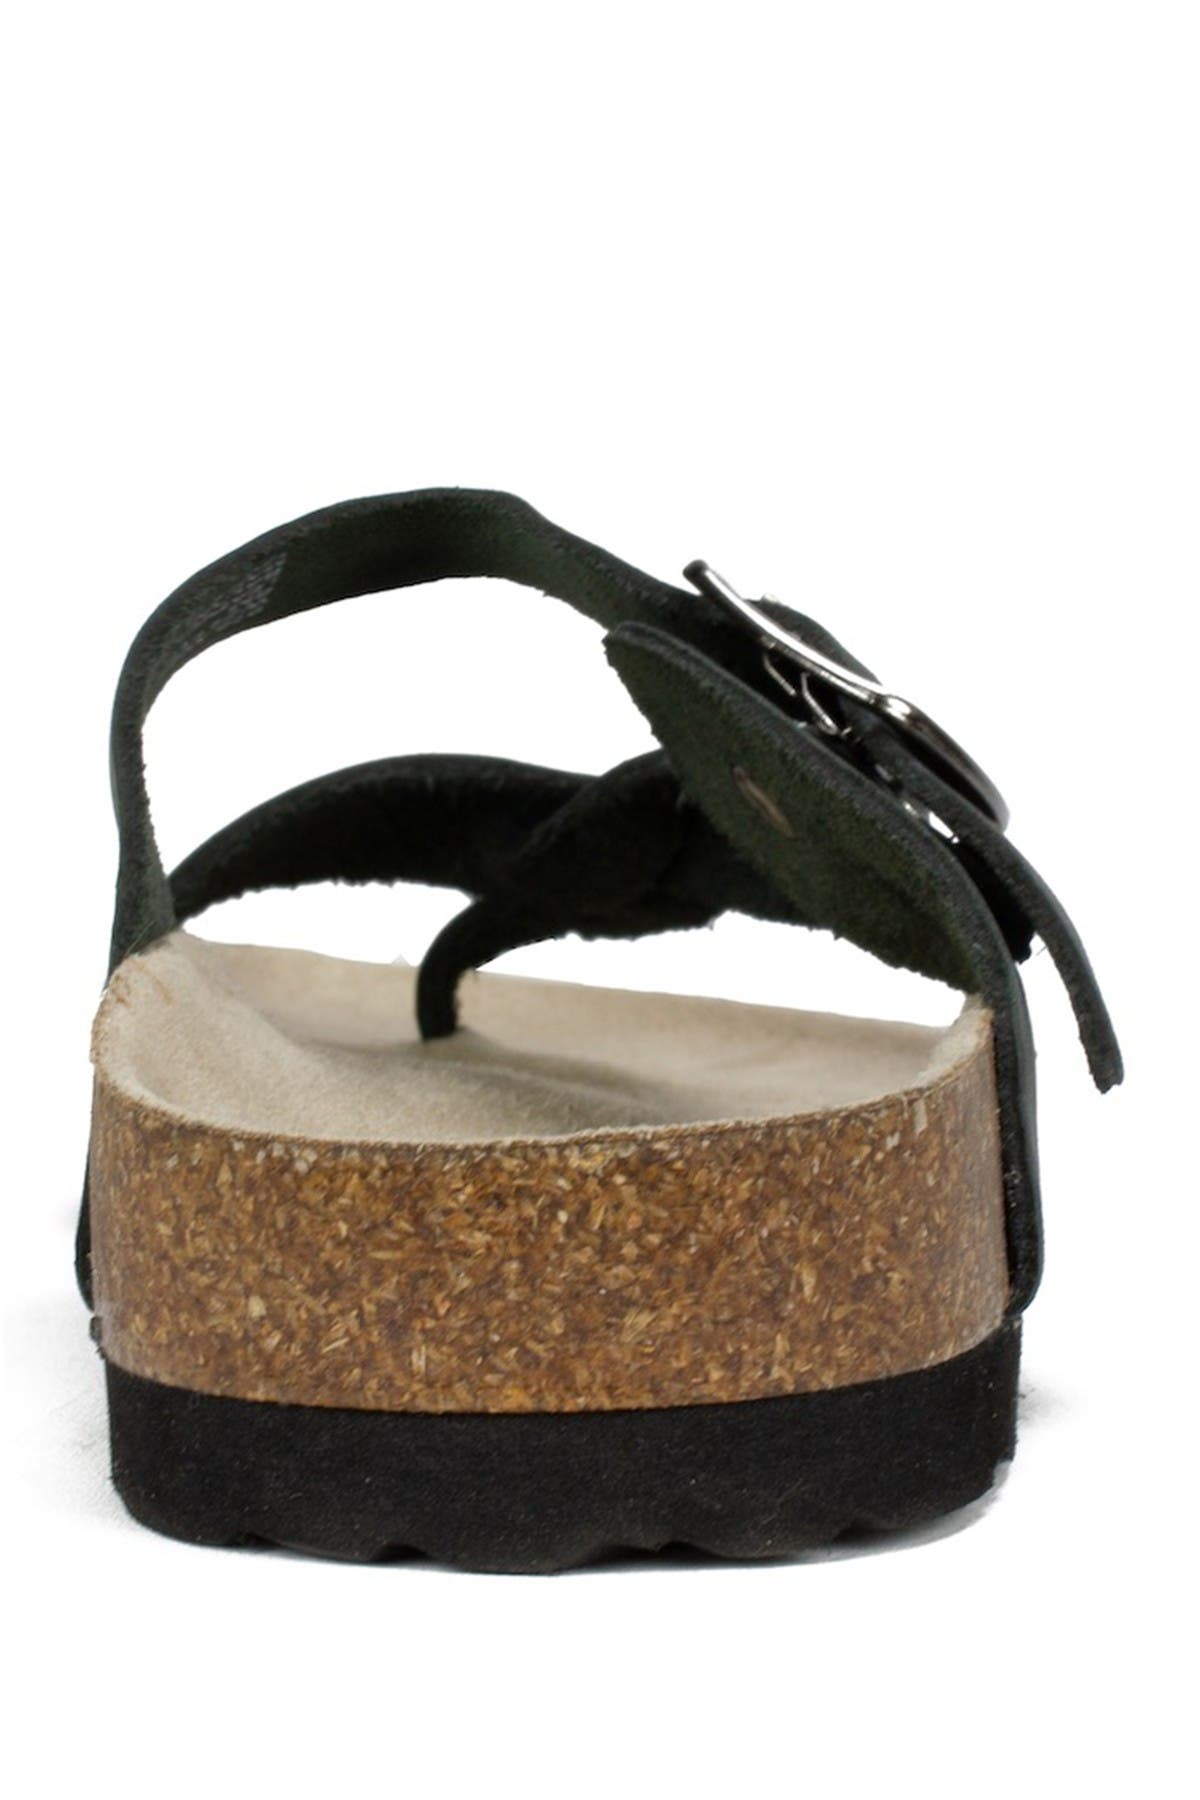 White Mountain Footwear Crawford Braided Footbed Sandal In Black/nubuck